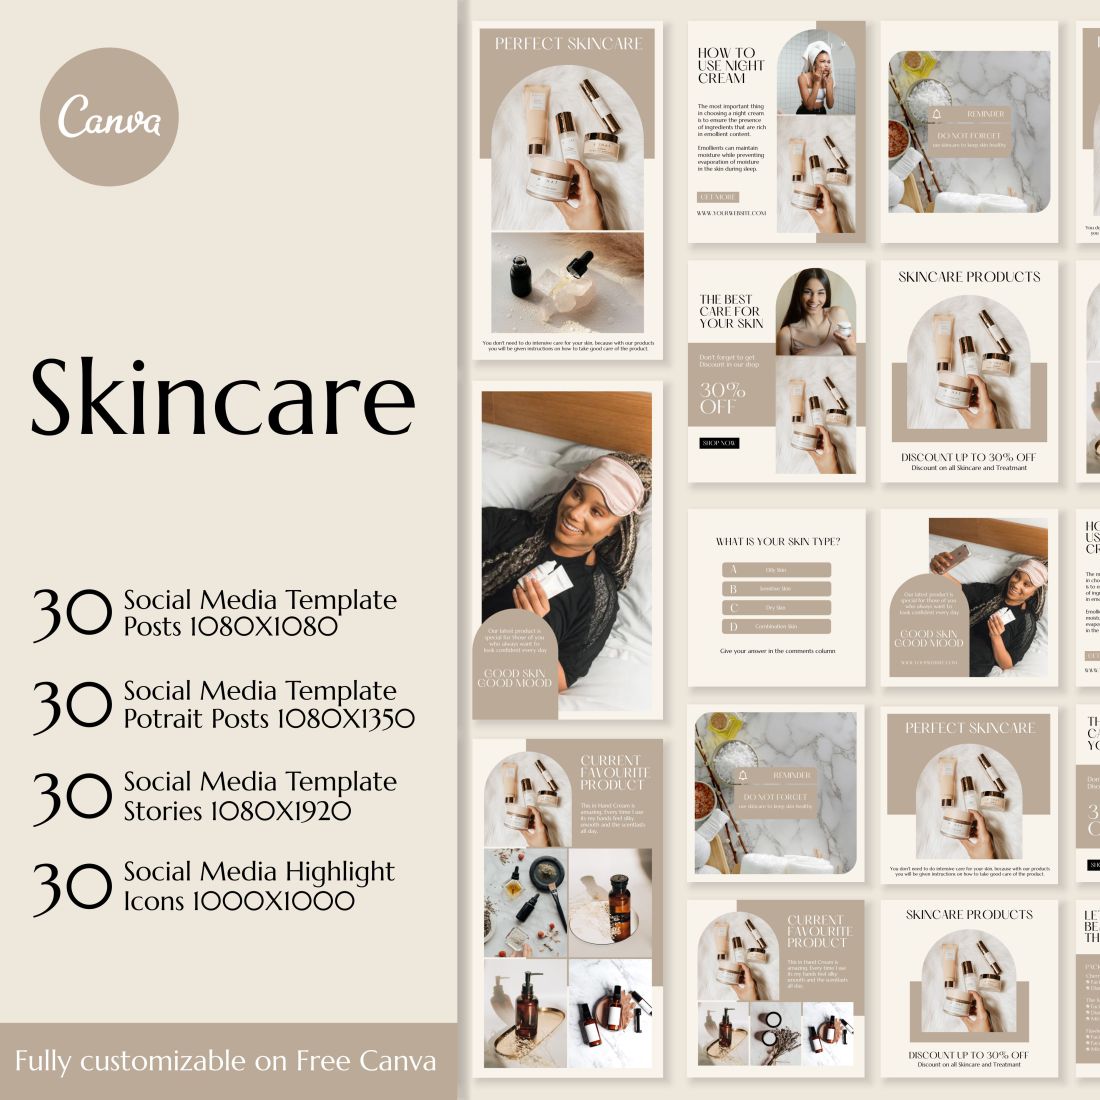 Social Media Instagram Templates For Skincare Cover Image.